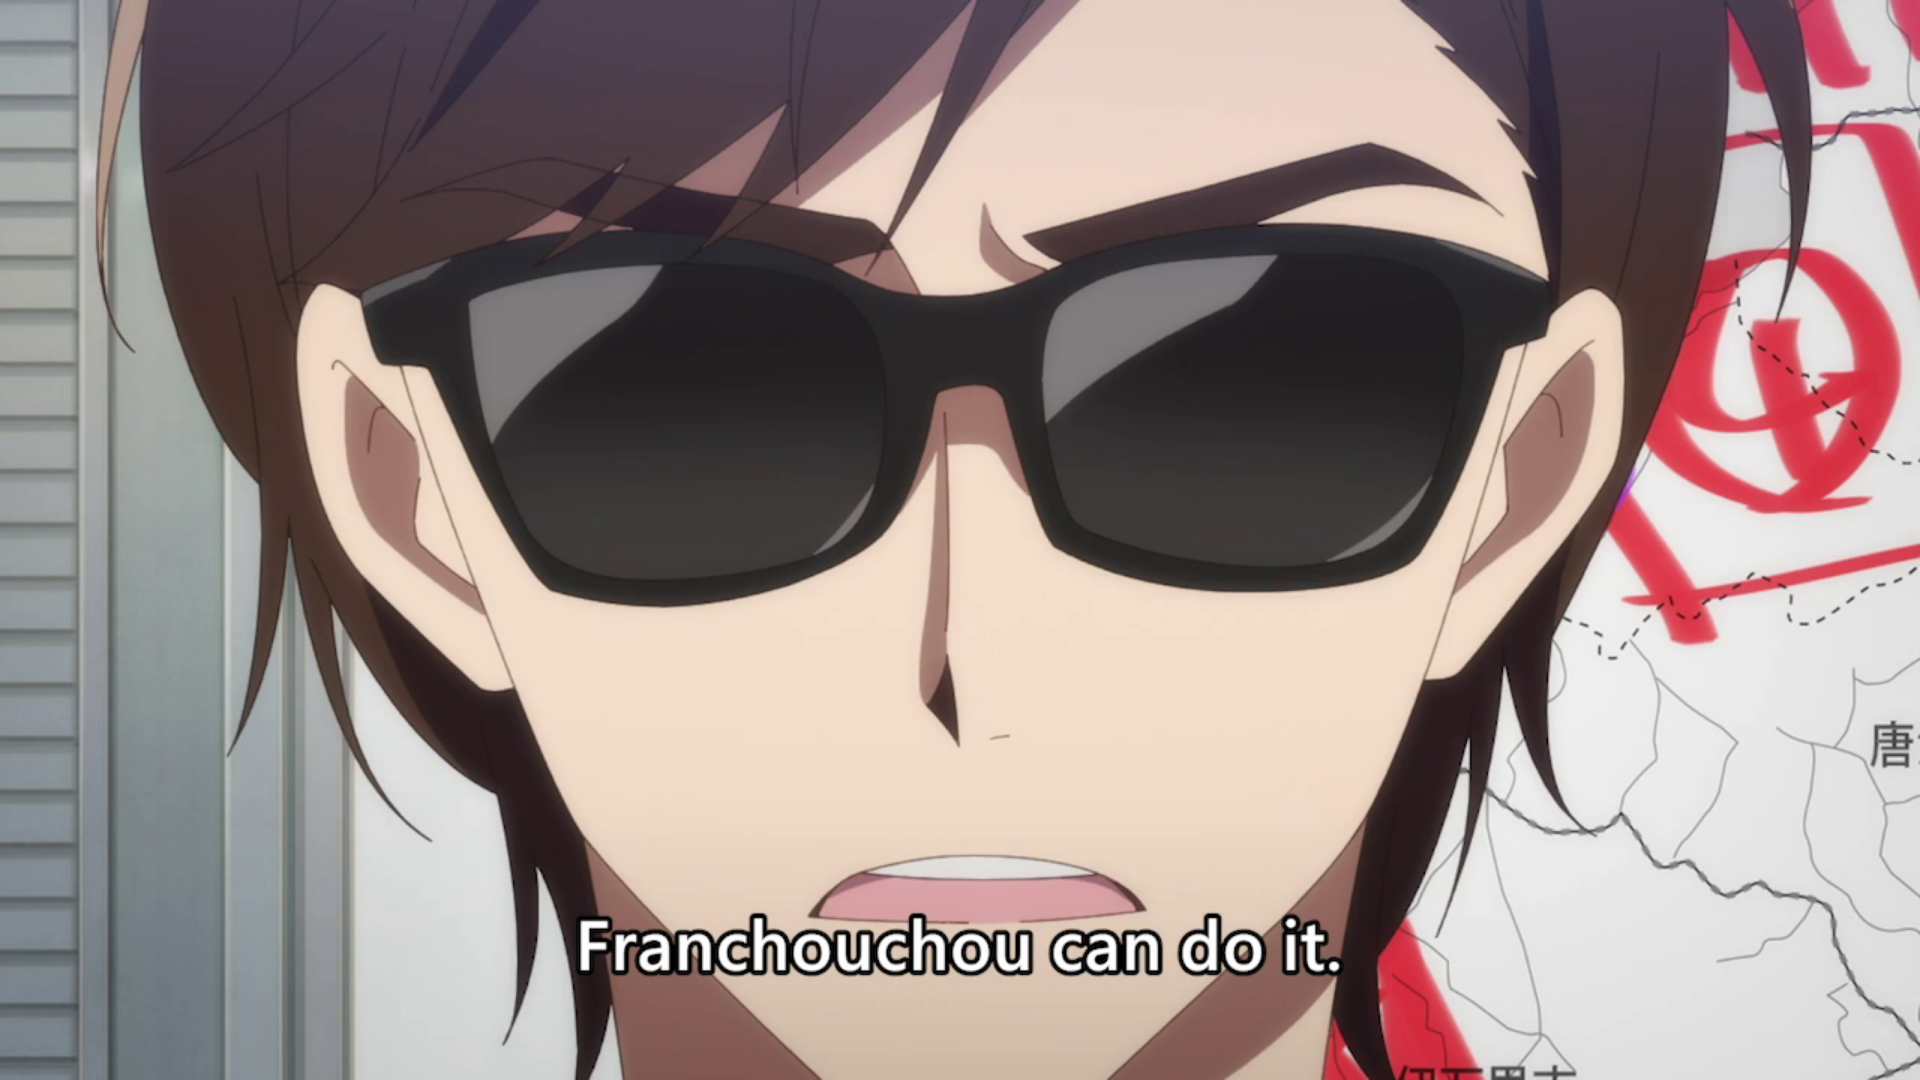 Kotaro believes in Franchouchou